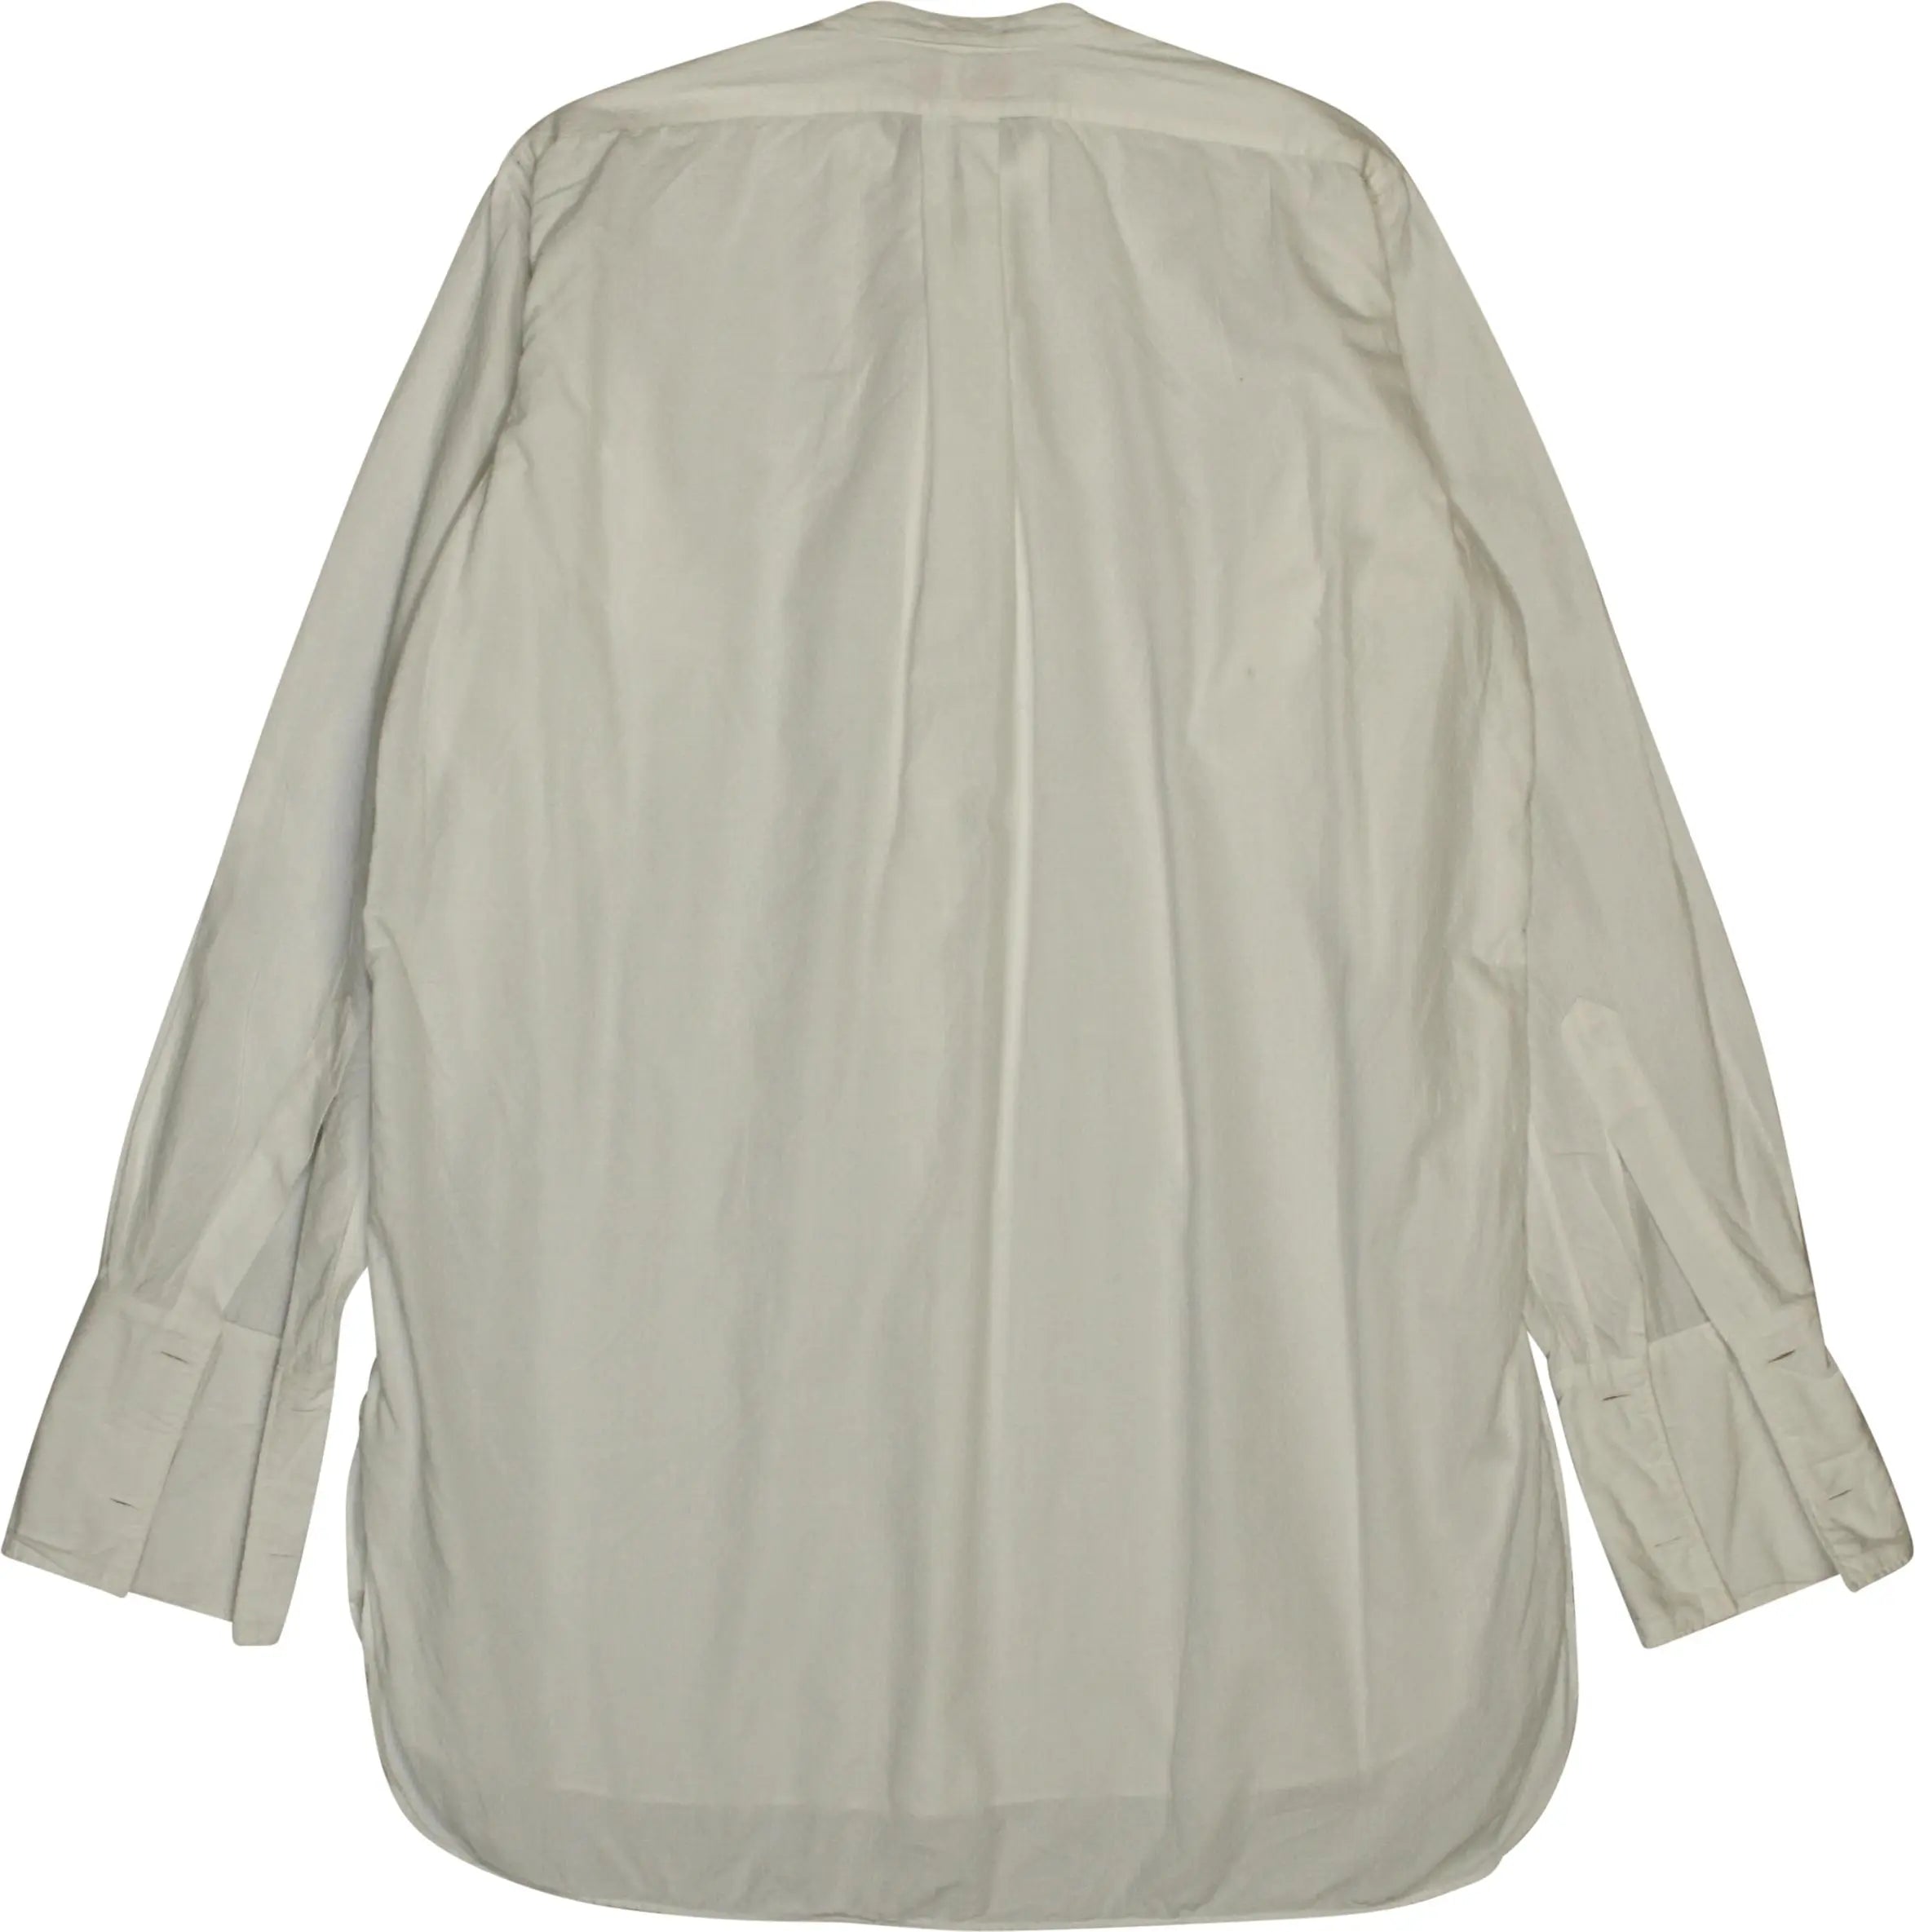 Seidensticker - Long Sleeve Shirt- ThriftTale.com - Vintage and second handclothing